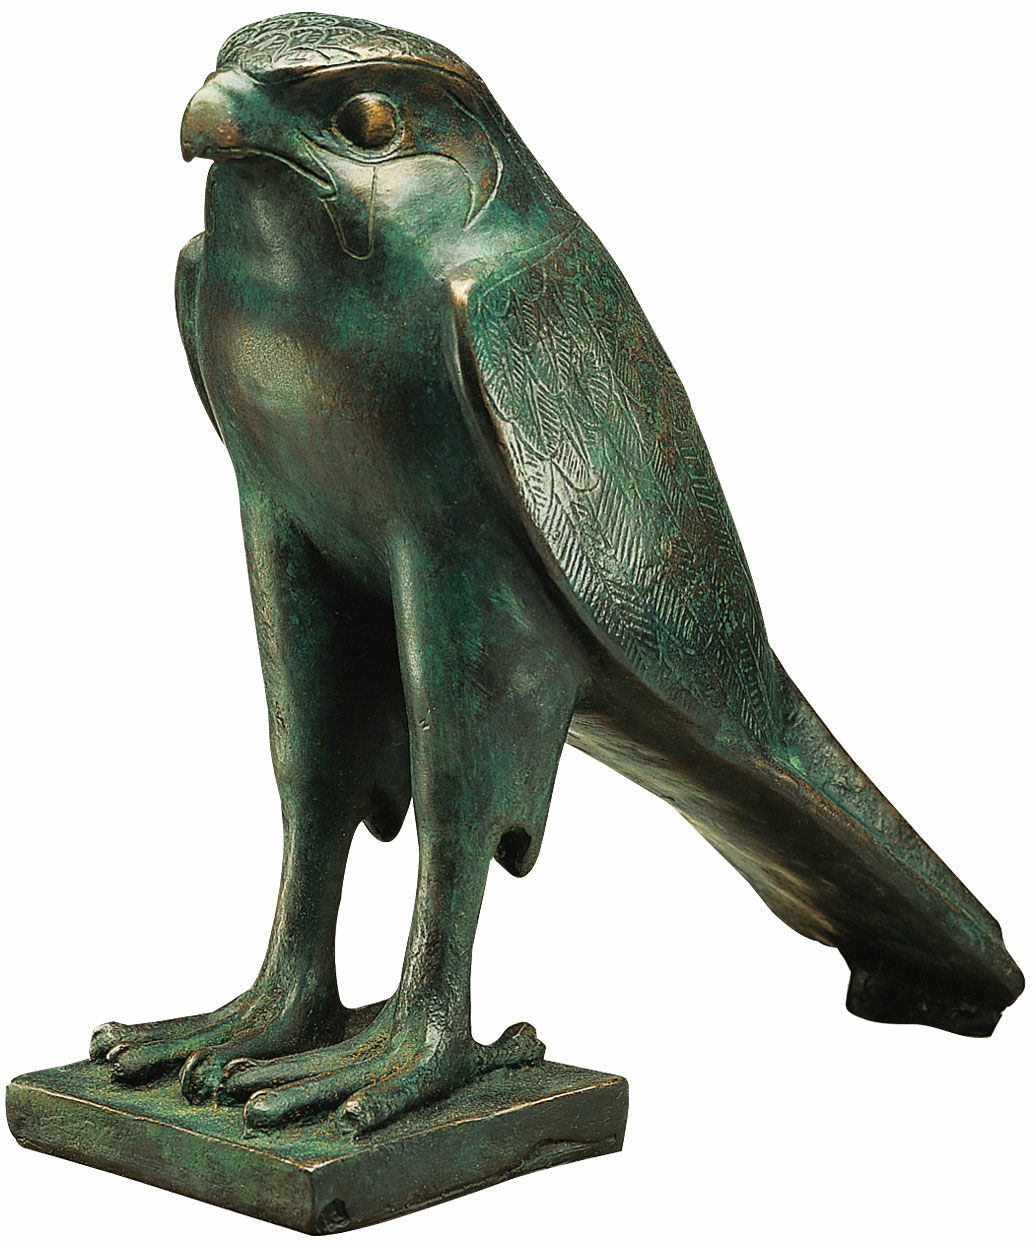 Sculpture "Horus Falcon", bonded bronze version